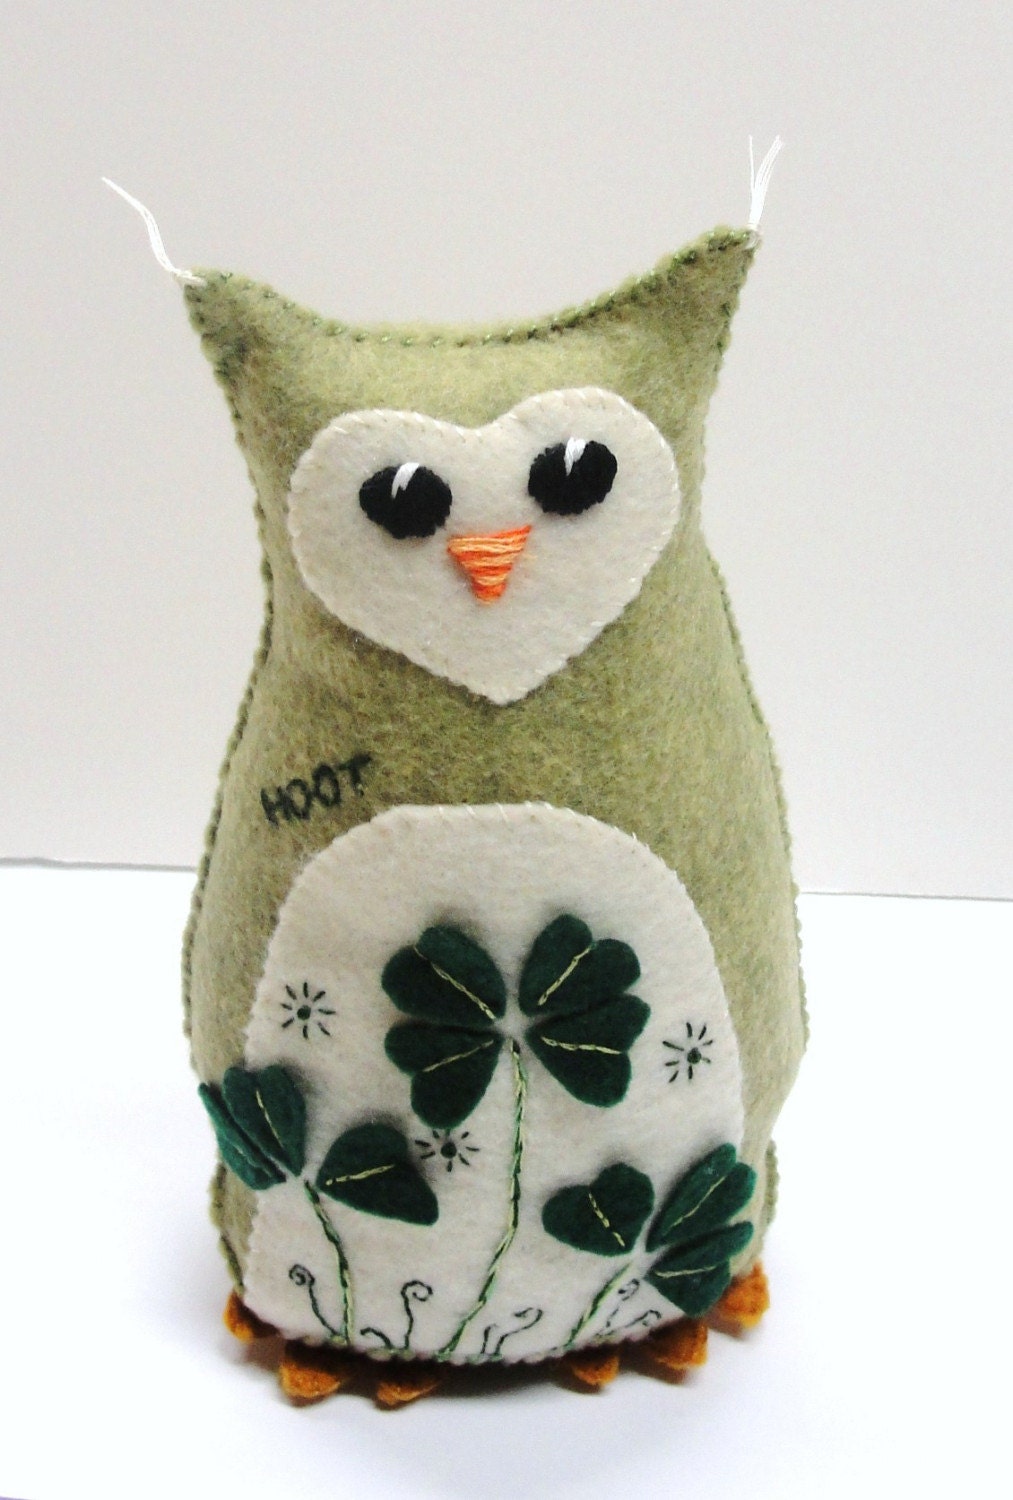 HOOT 8 in. tall stuffed owl in mossy green with shamrocks